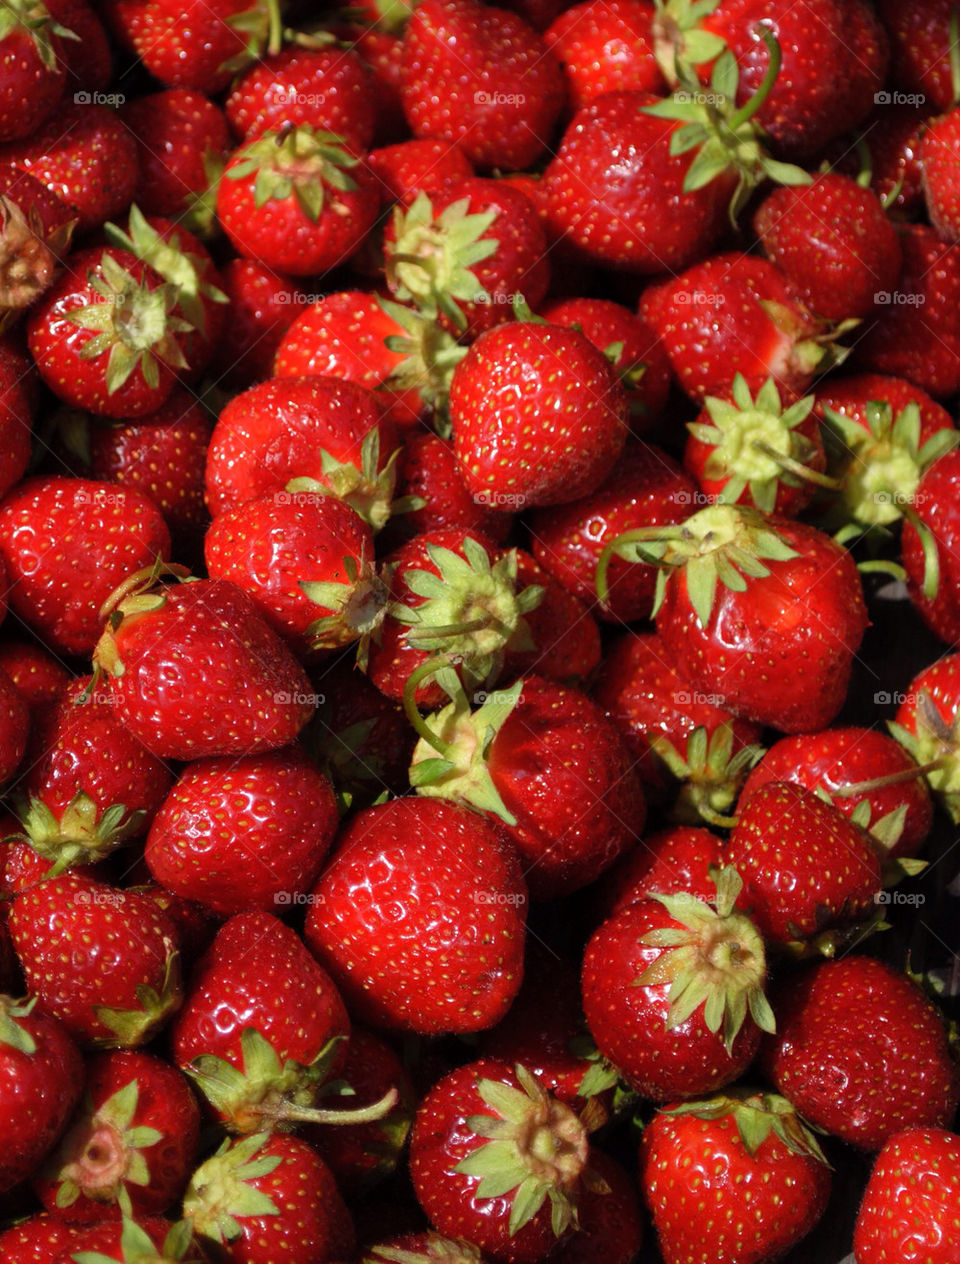 city strawberry market farmers by hiro